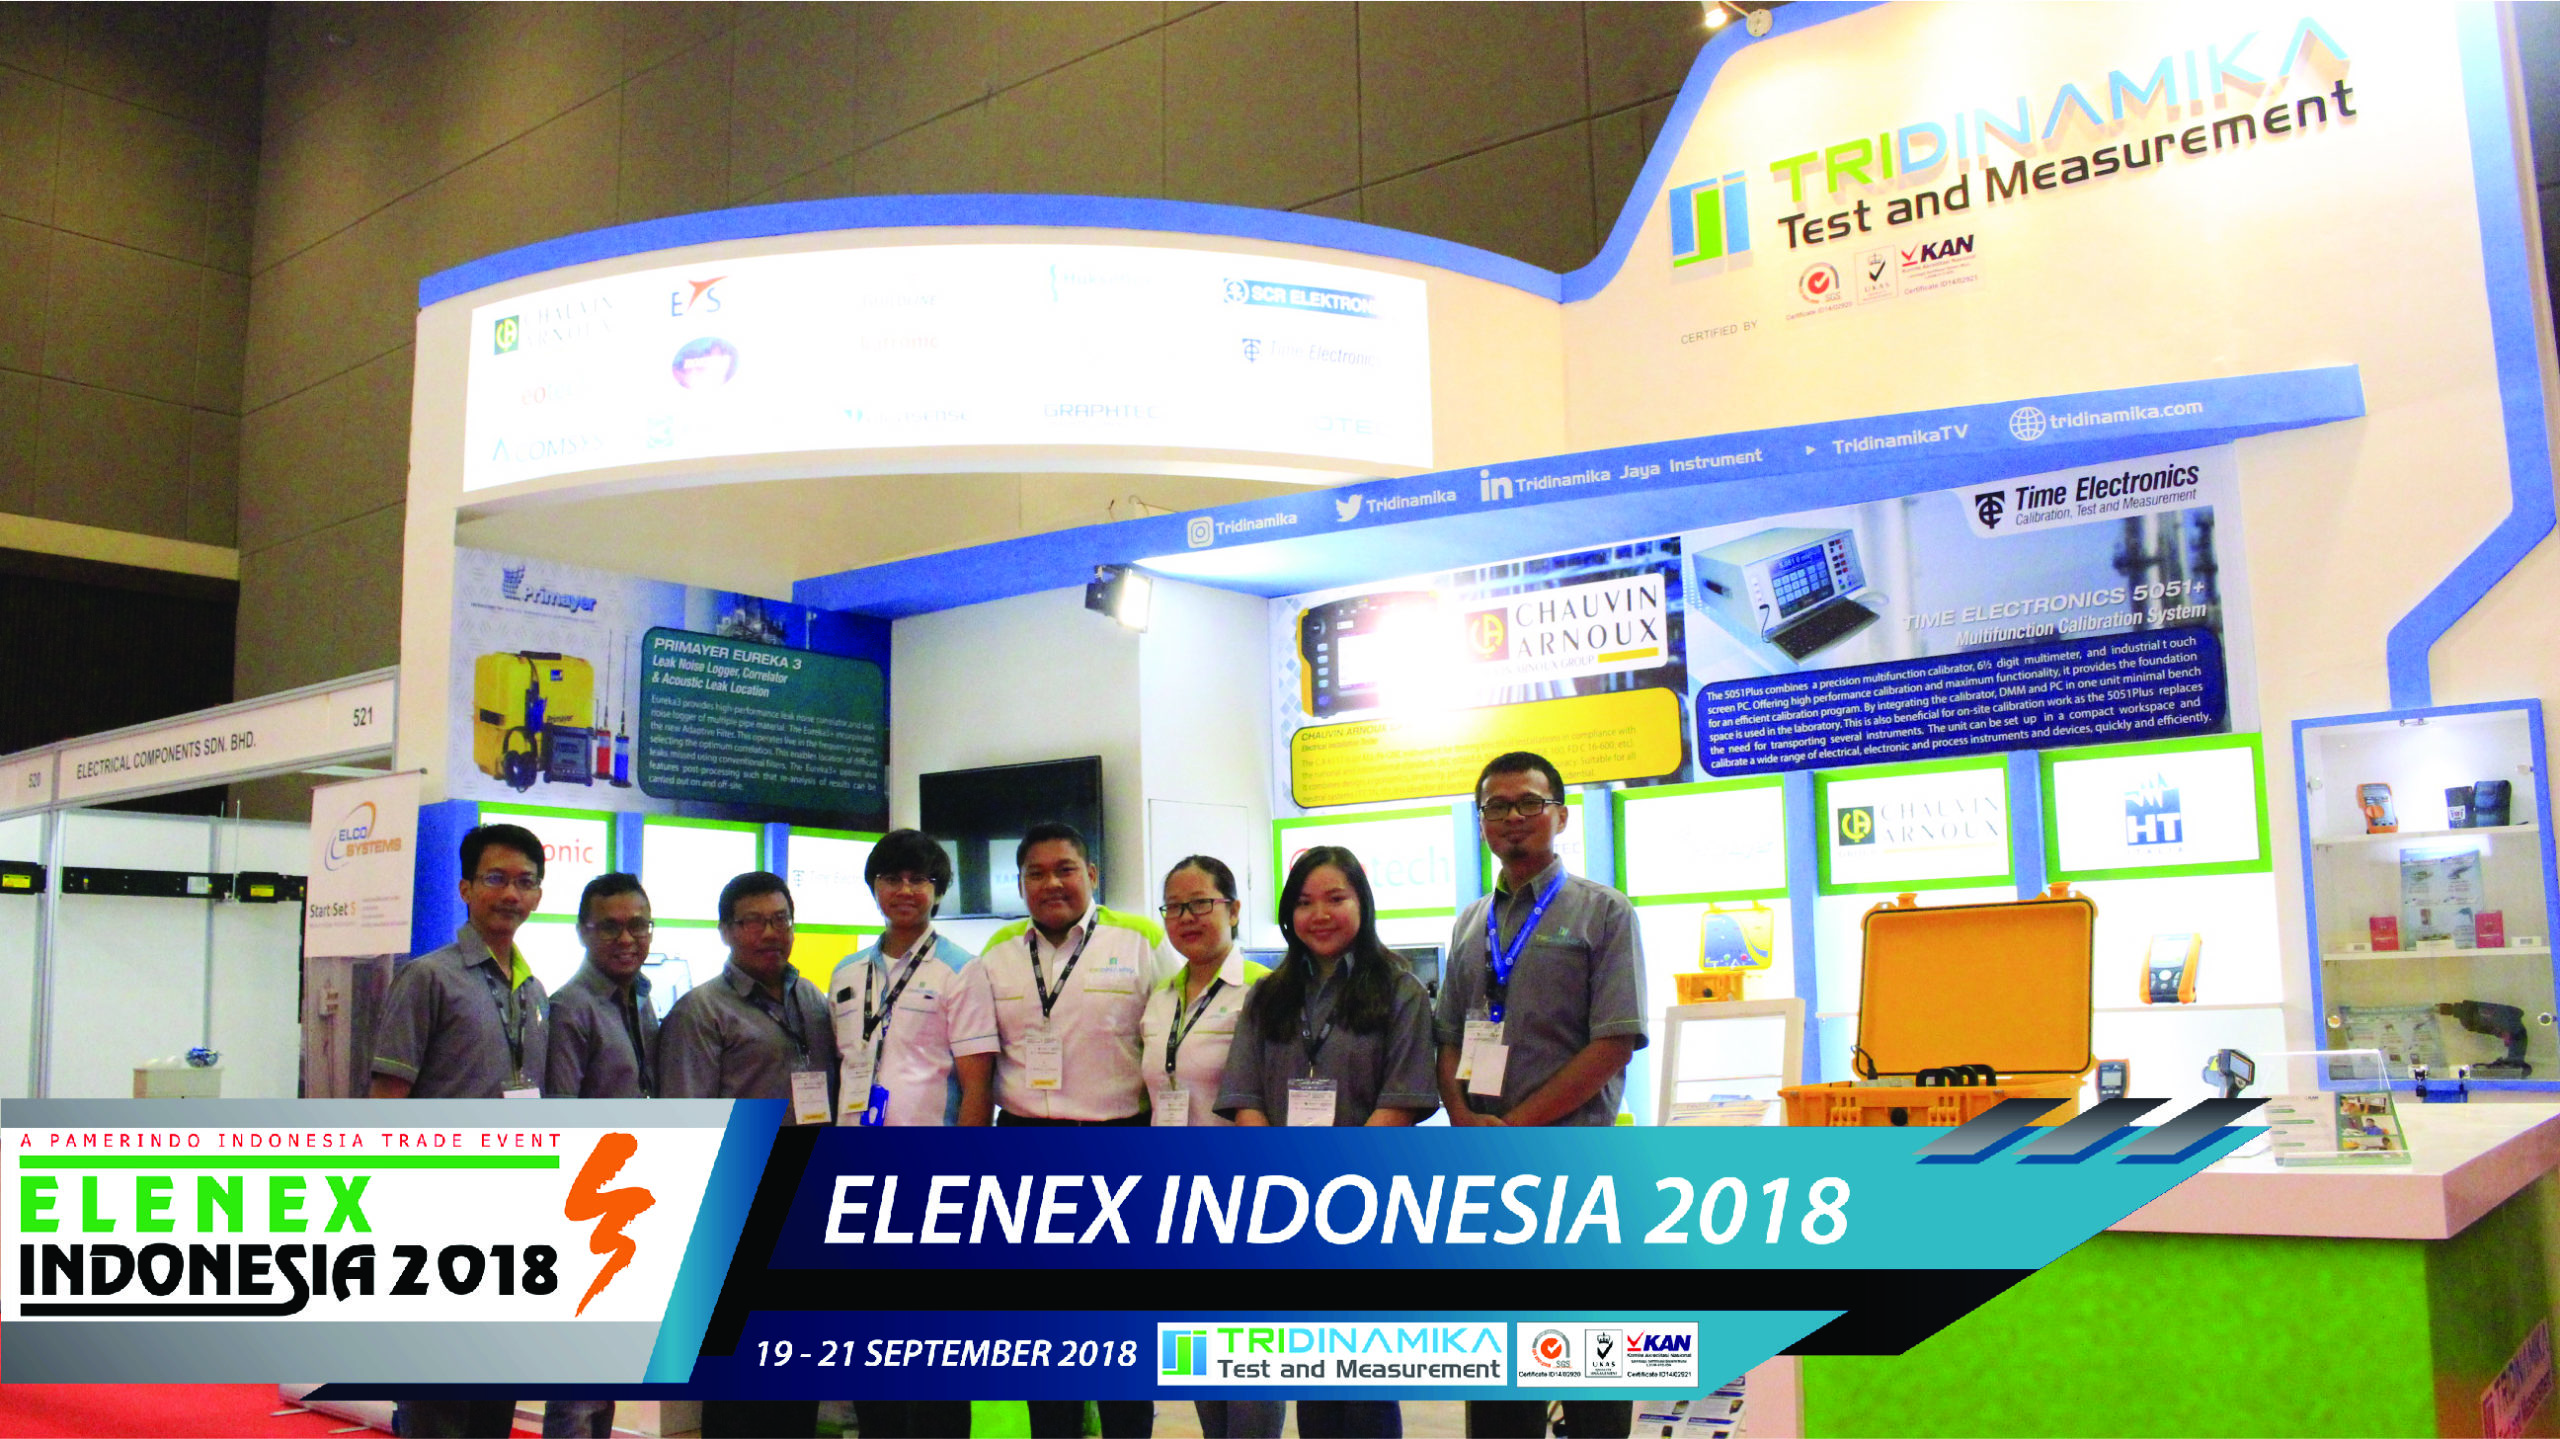 Elenex Indonesia Exhibition 2018